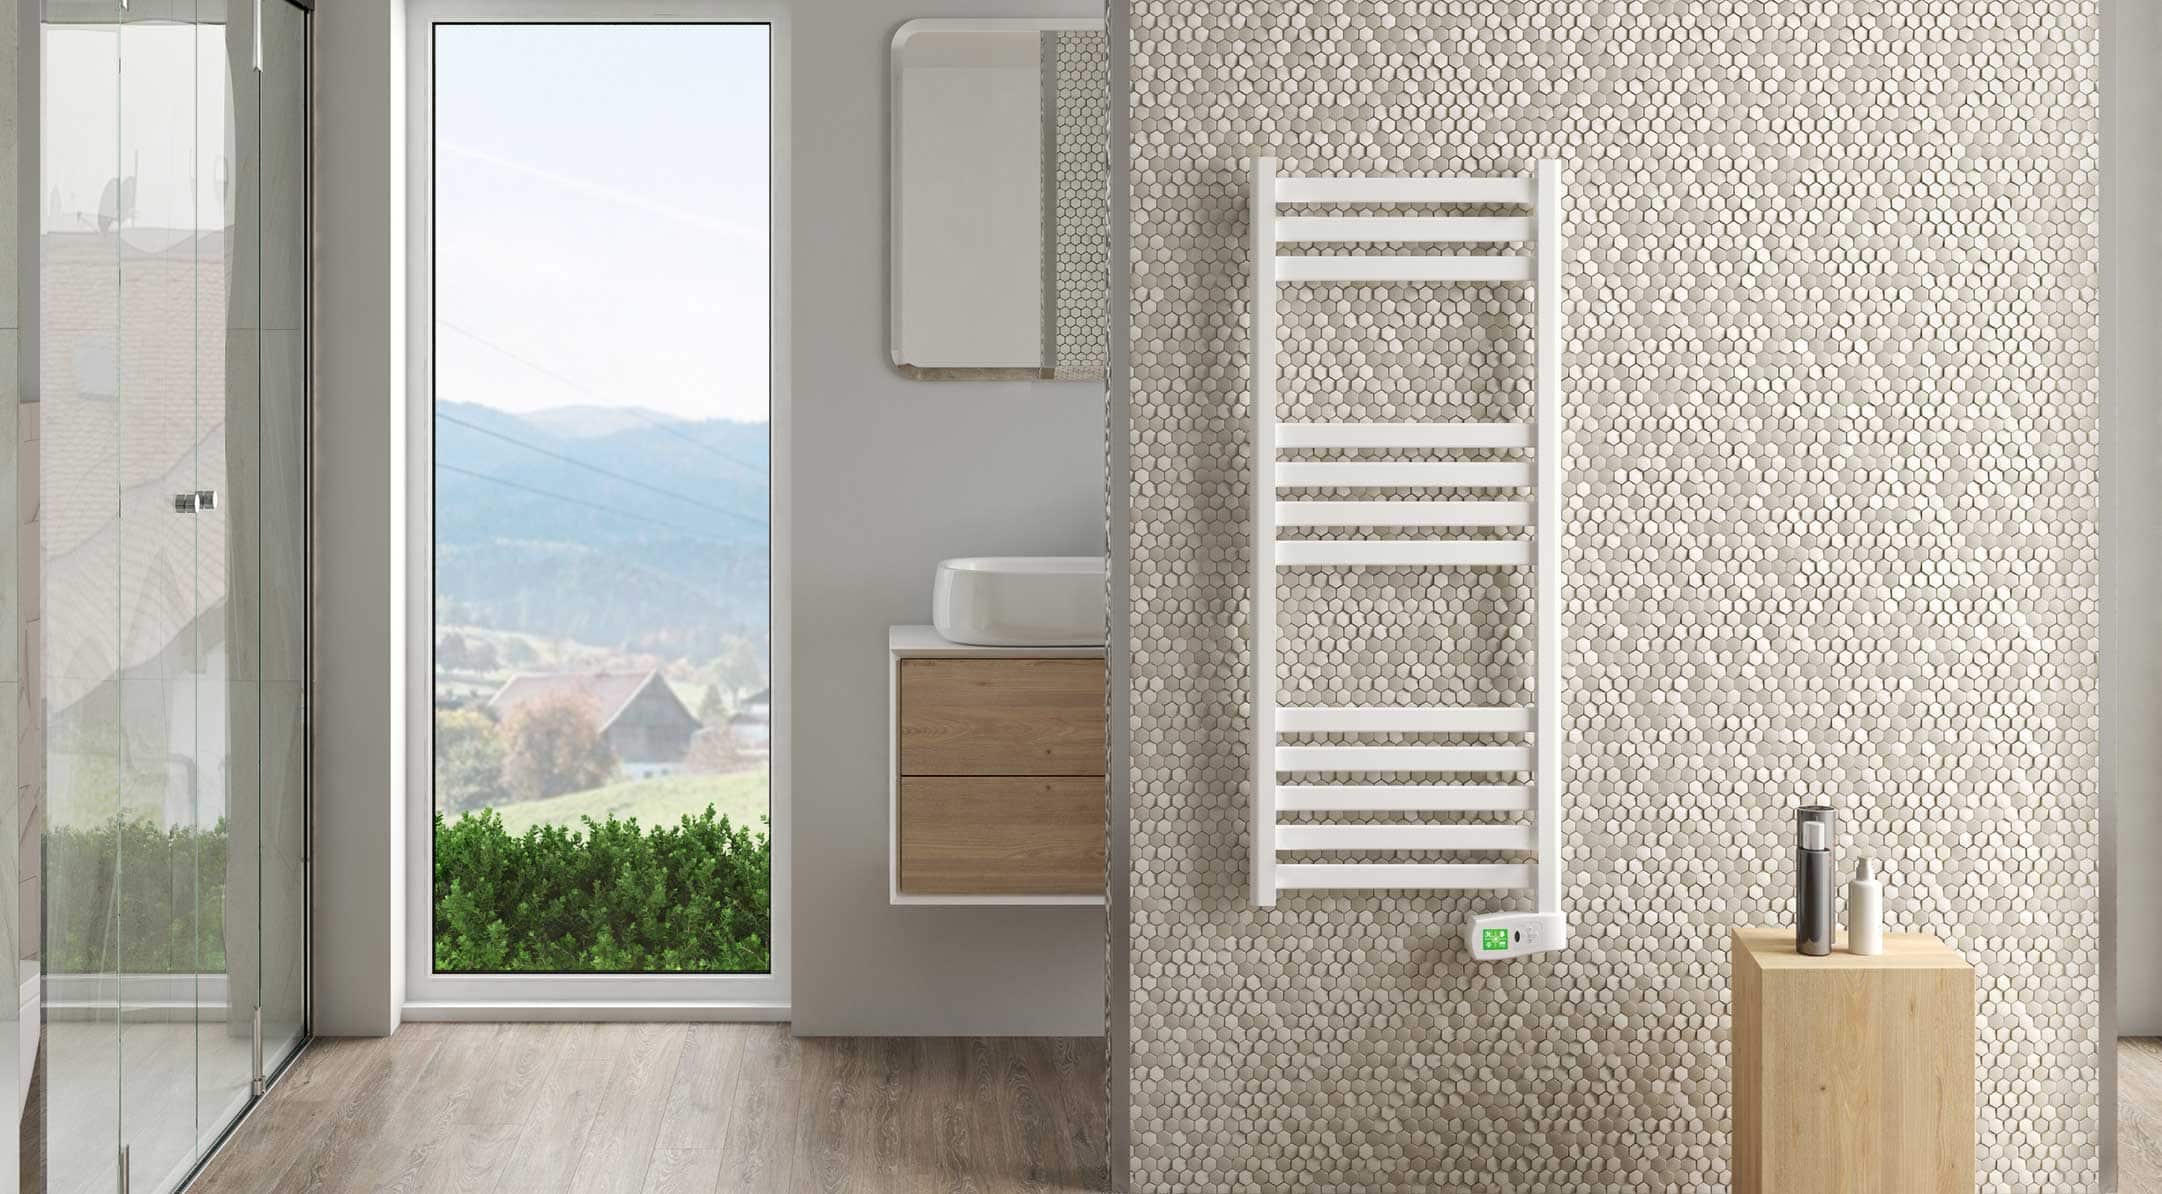 Rointe Kyros smart timer electric towel rail heater in white wall mounted in beige bathroom